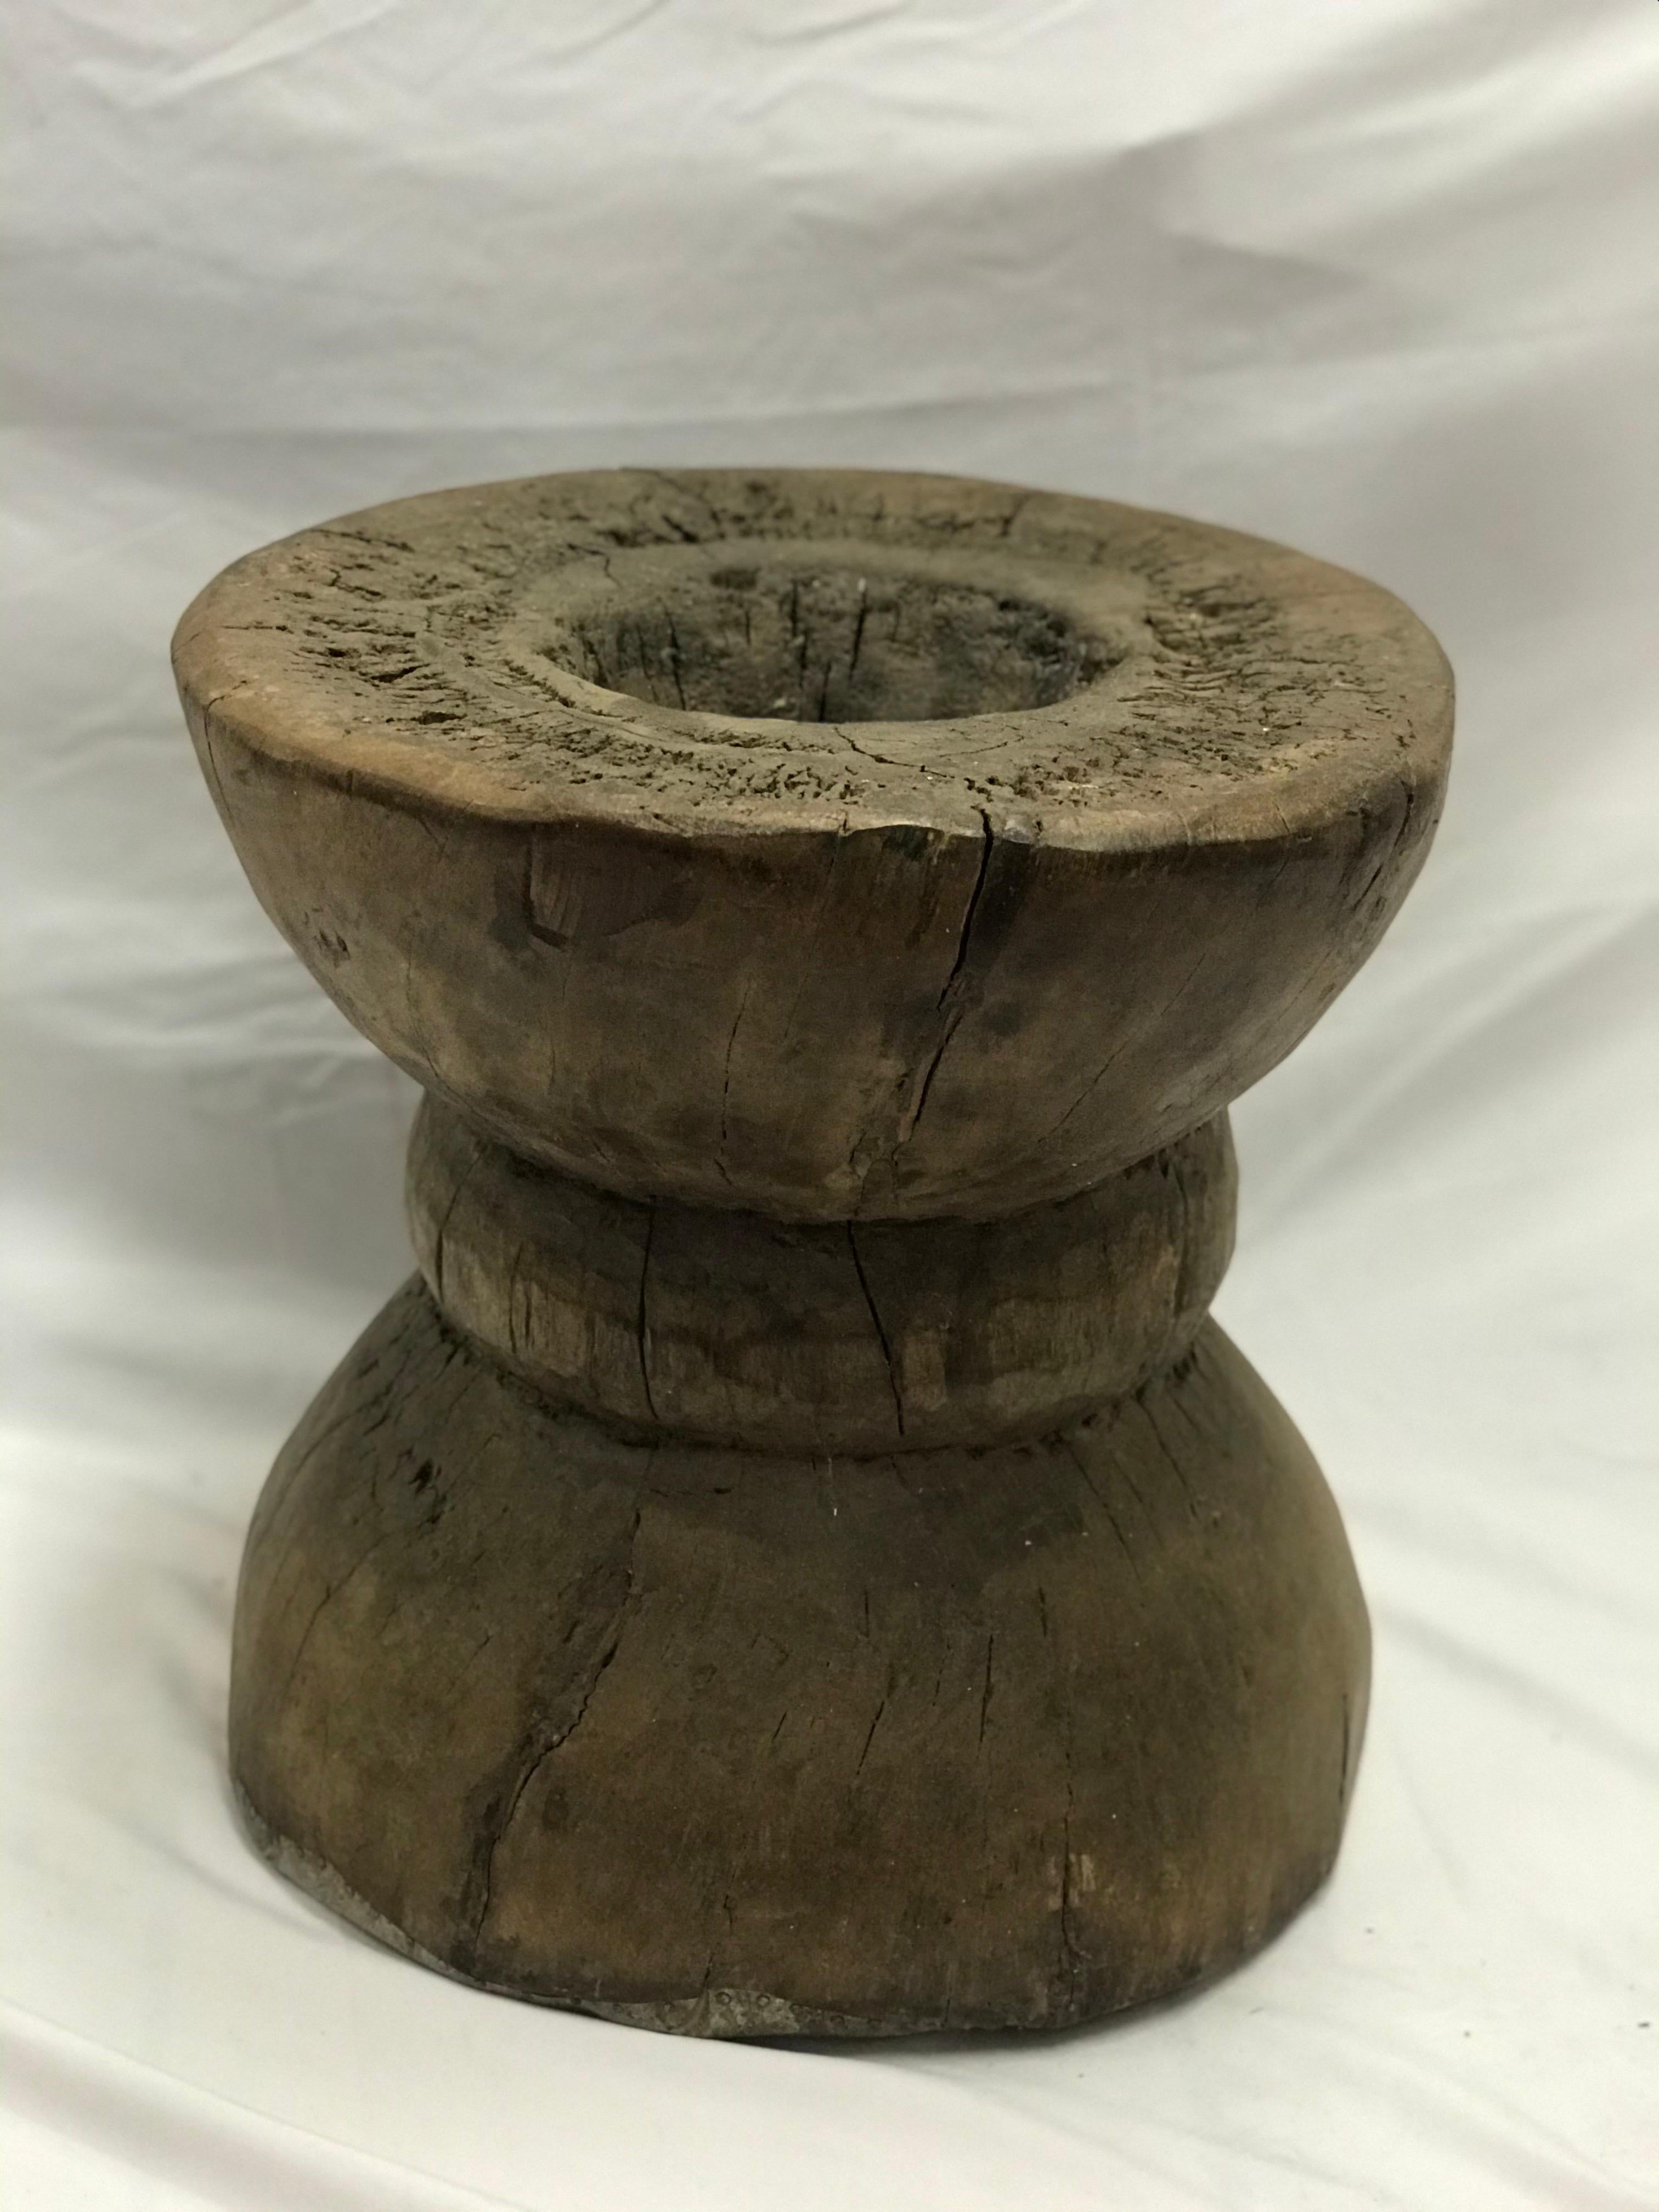 Vintage solid wood rice grinder.

Dimensions. 16 W ; 15 H ; 16 D.